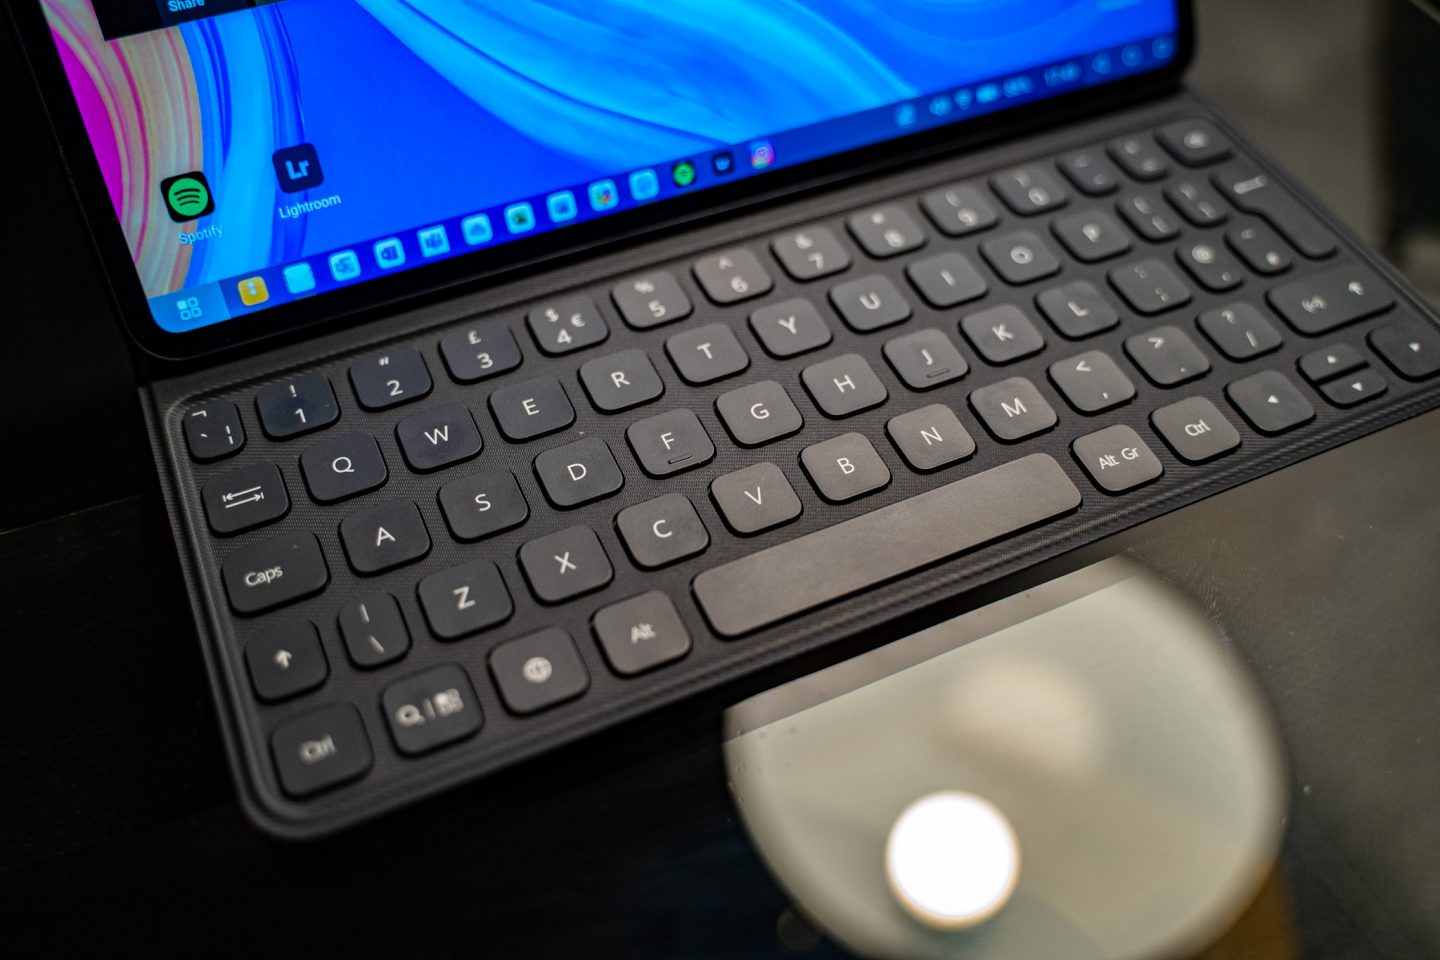 Huawei Matepad Pro - keyboard cover keys